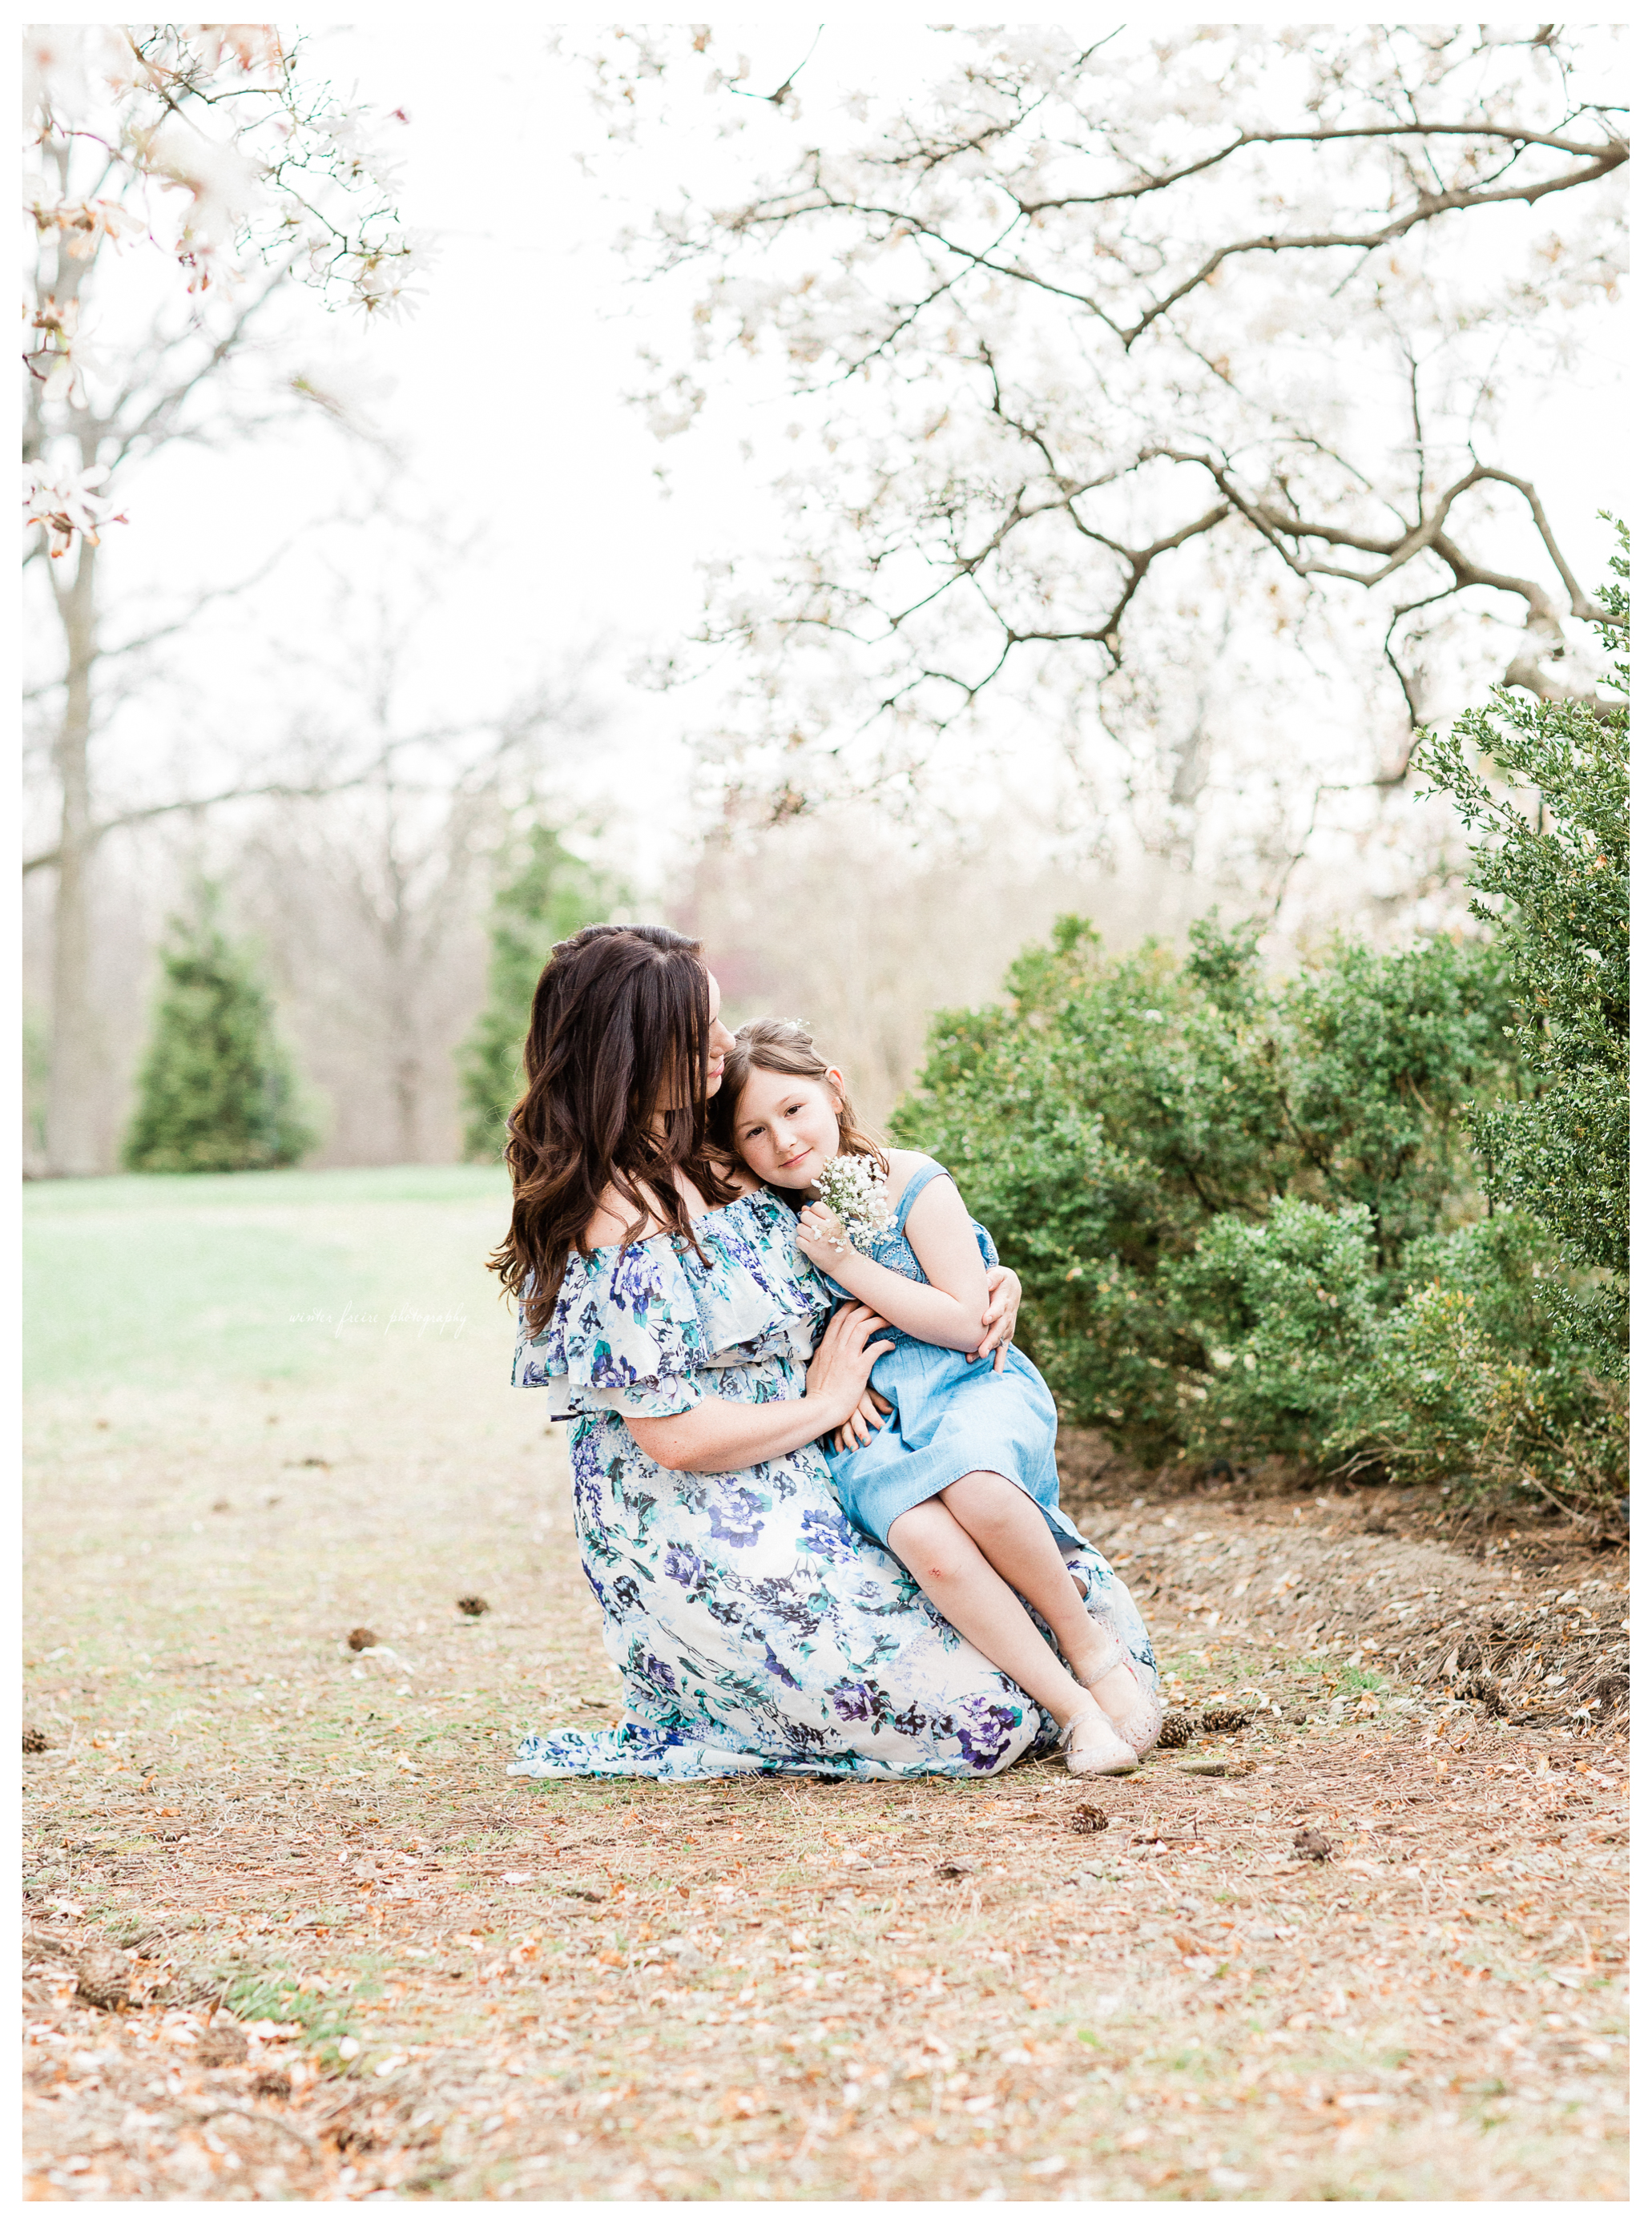 Winter Freire Photography | Elegant Timeless Organic Portraits | Dayton, Ohio Motherhood Photography | Motherhood | Mother's Day 2018 | Fine Art Photographer Dayton, Ohio